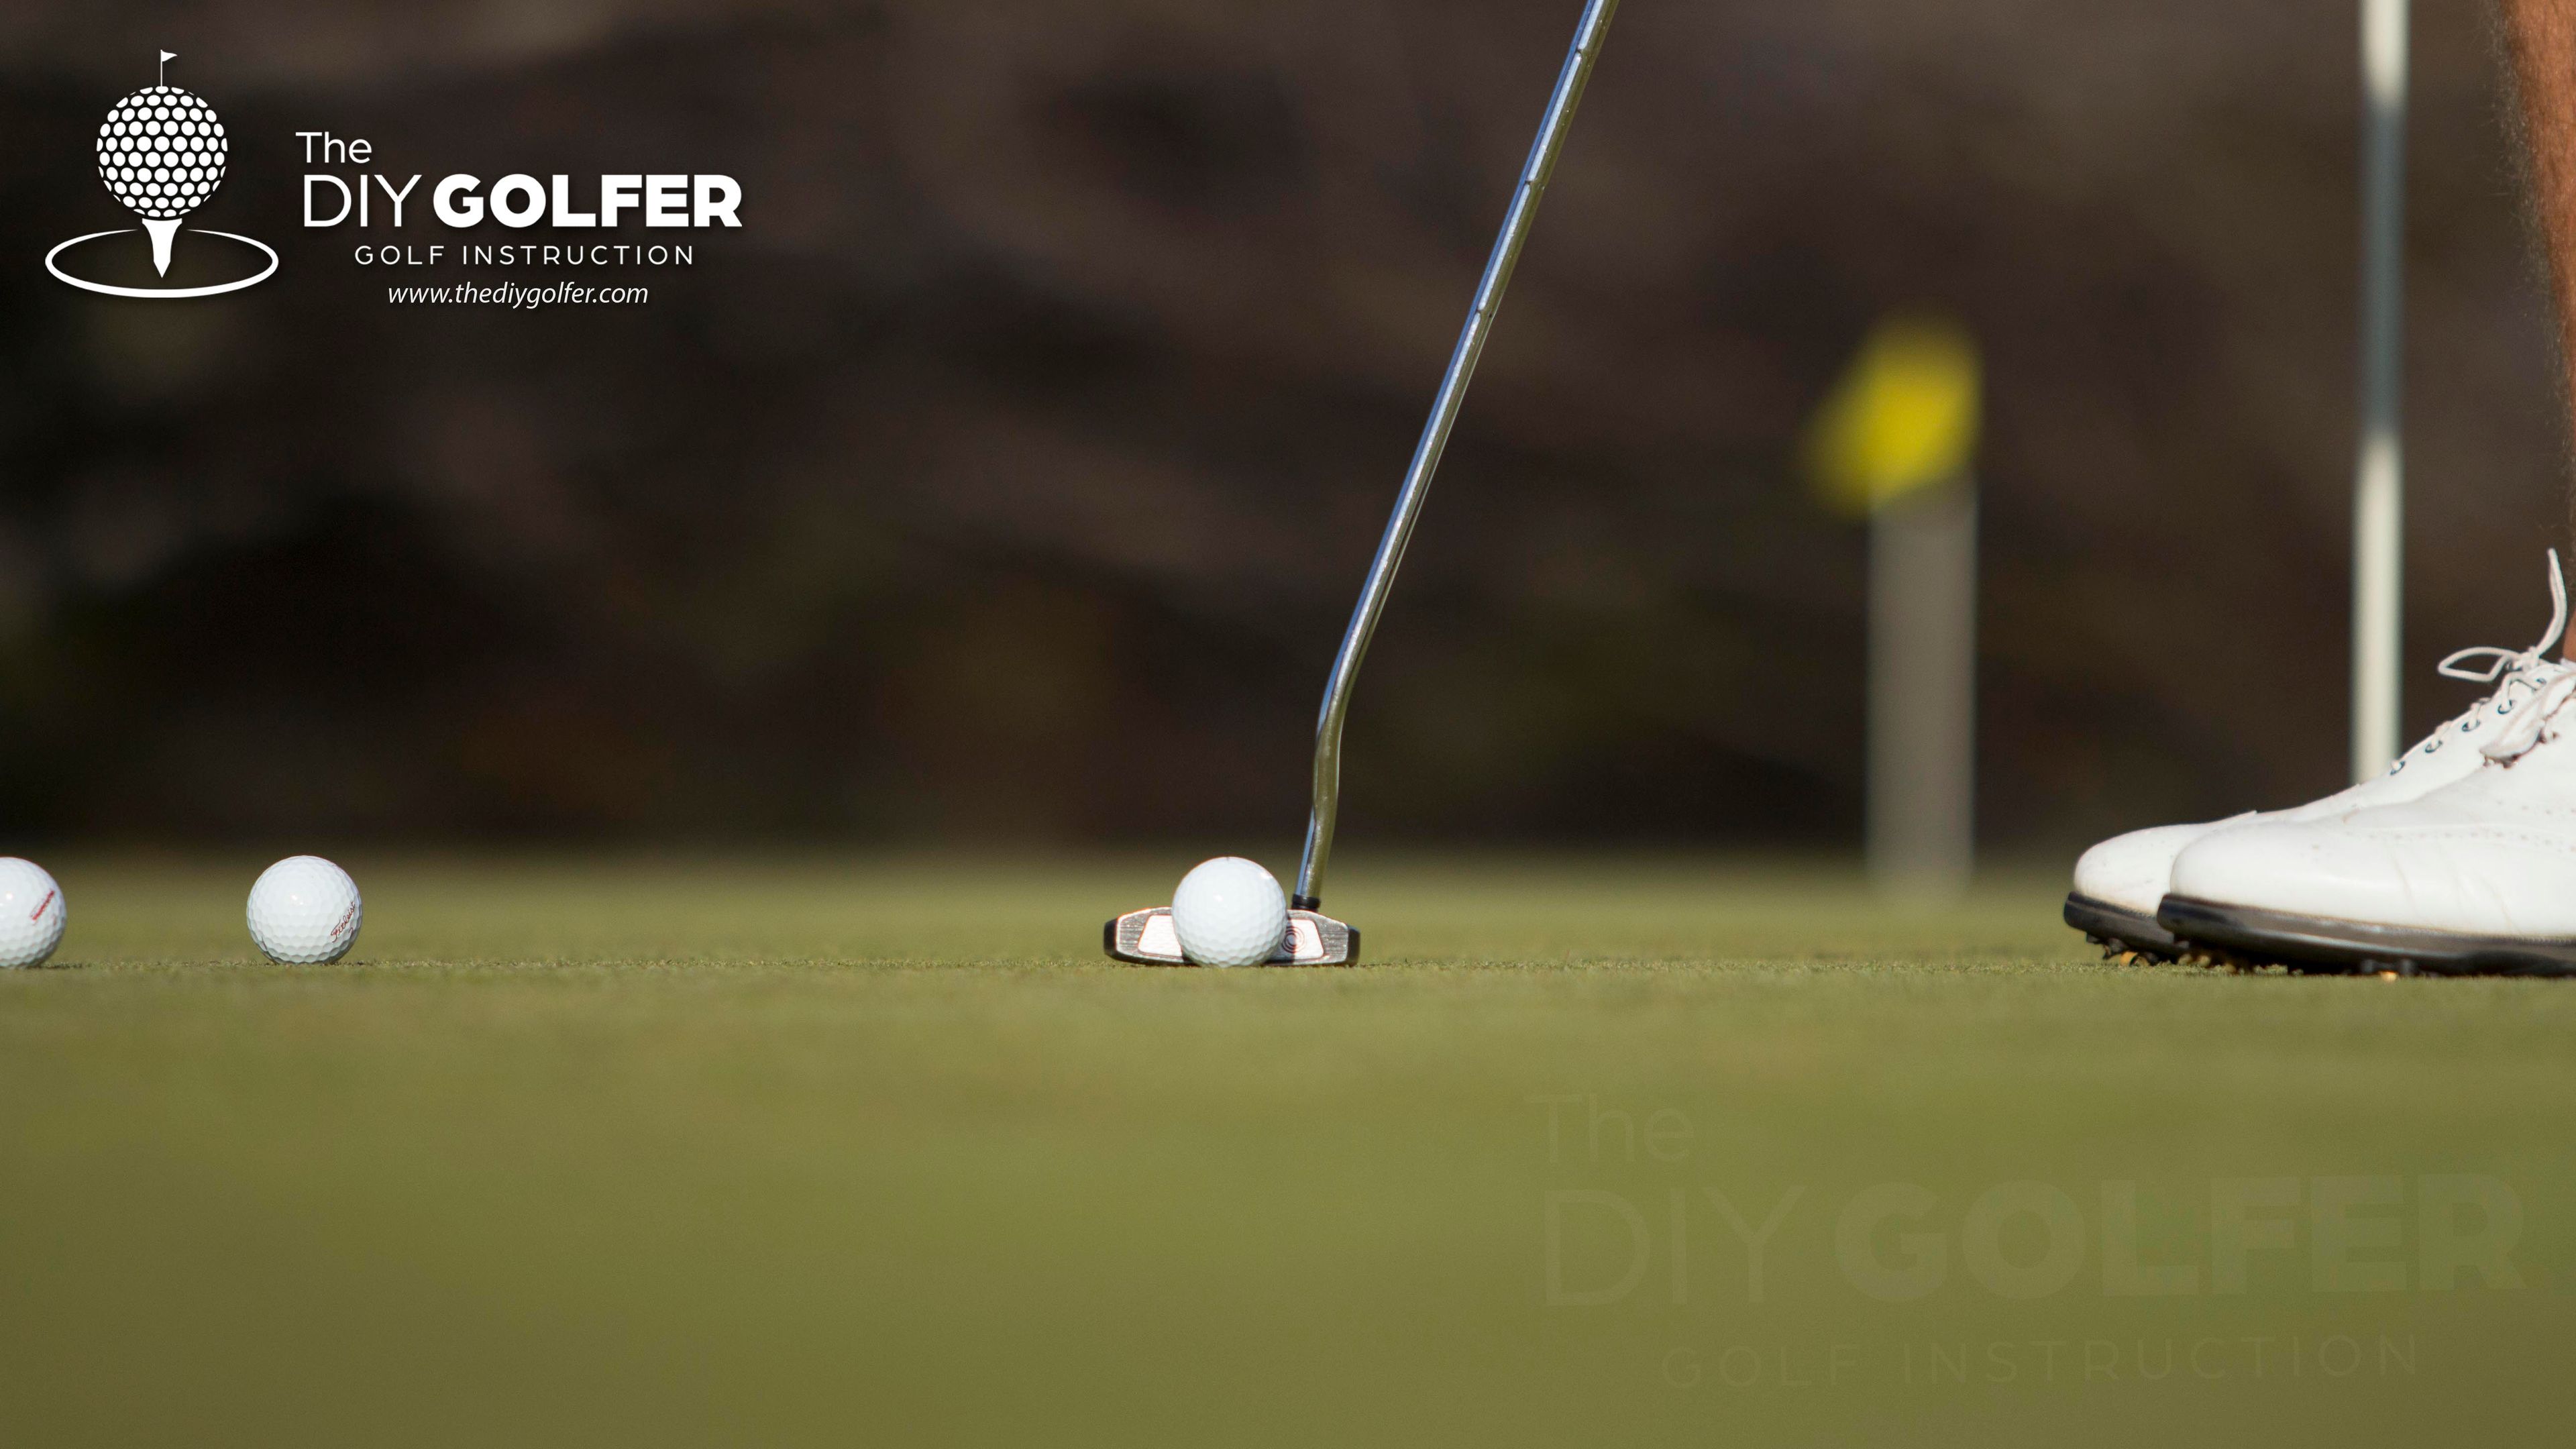 High Definition Golf Putting Photo: Preparing to Hit Putt